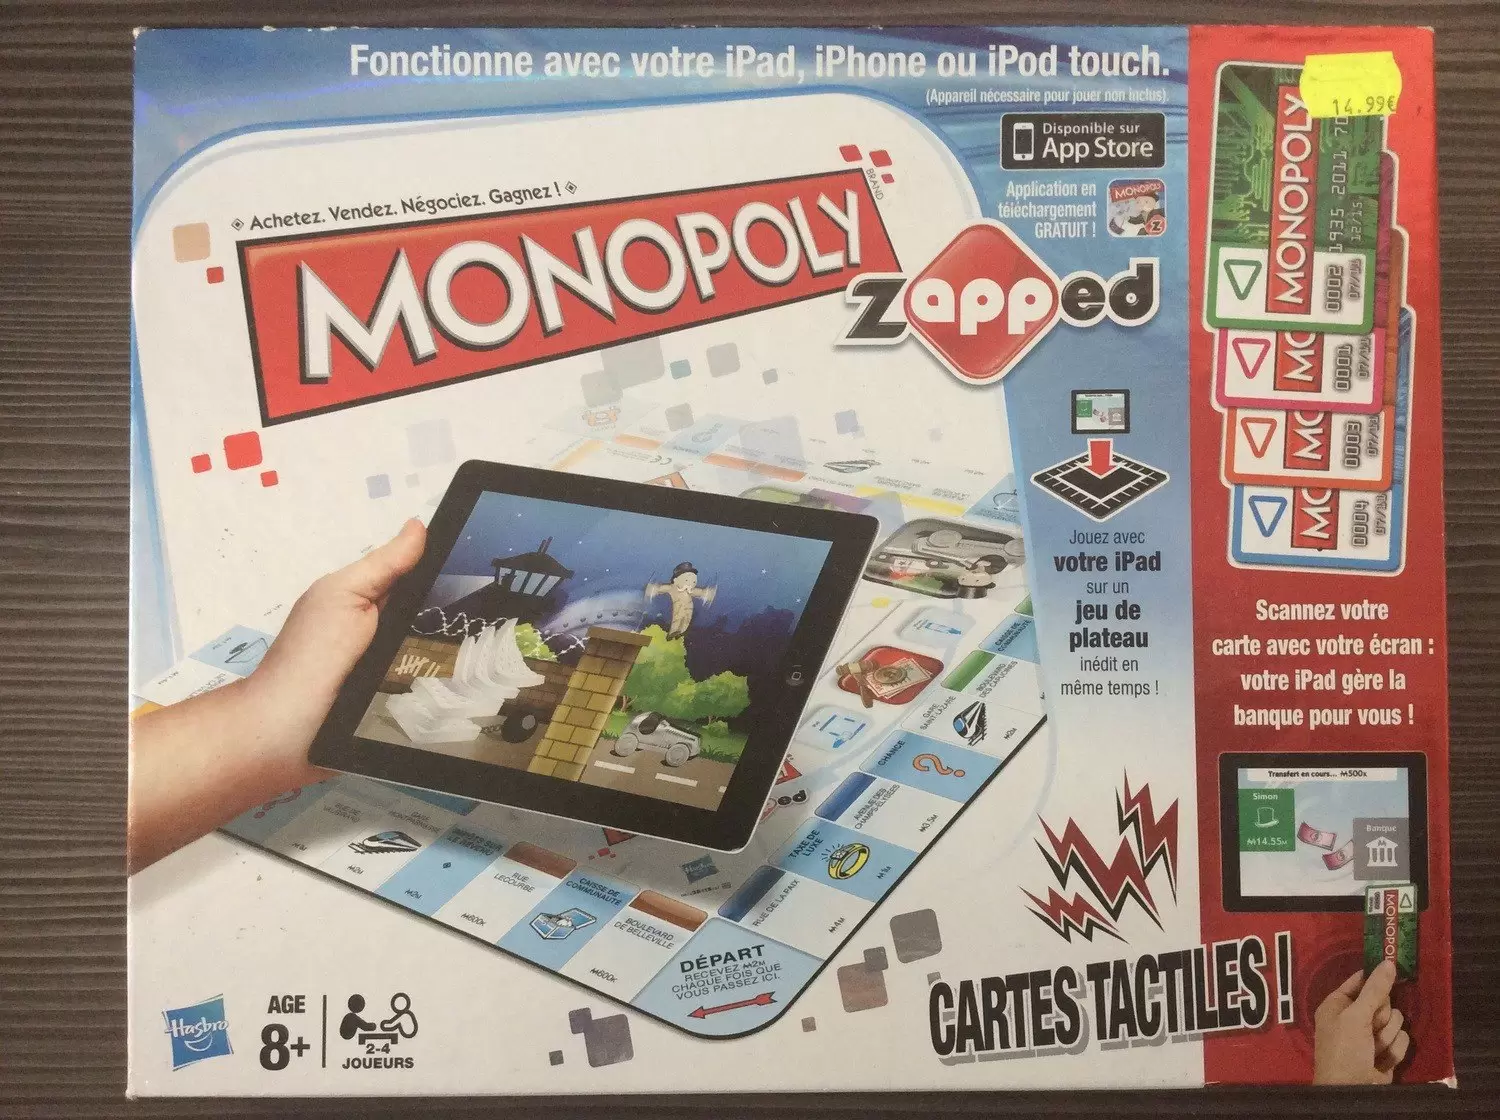 Monopoly Original - Monopoly Zapped